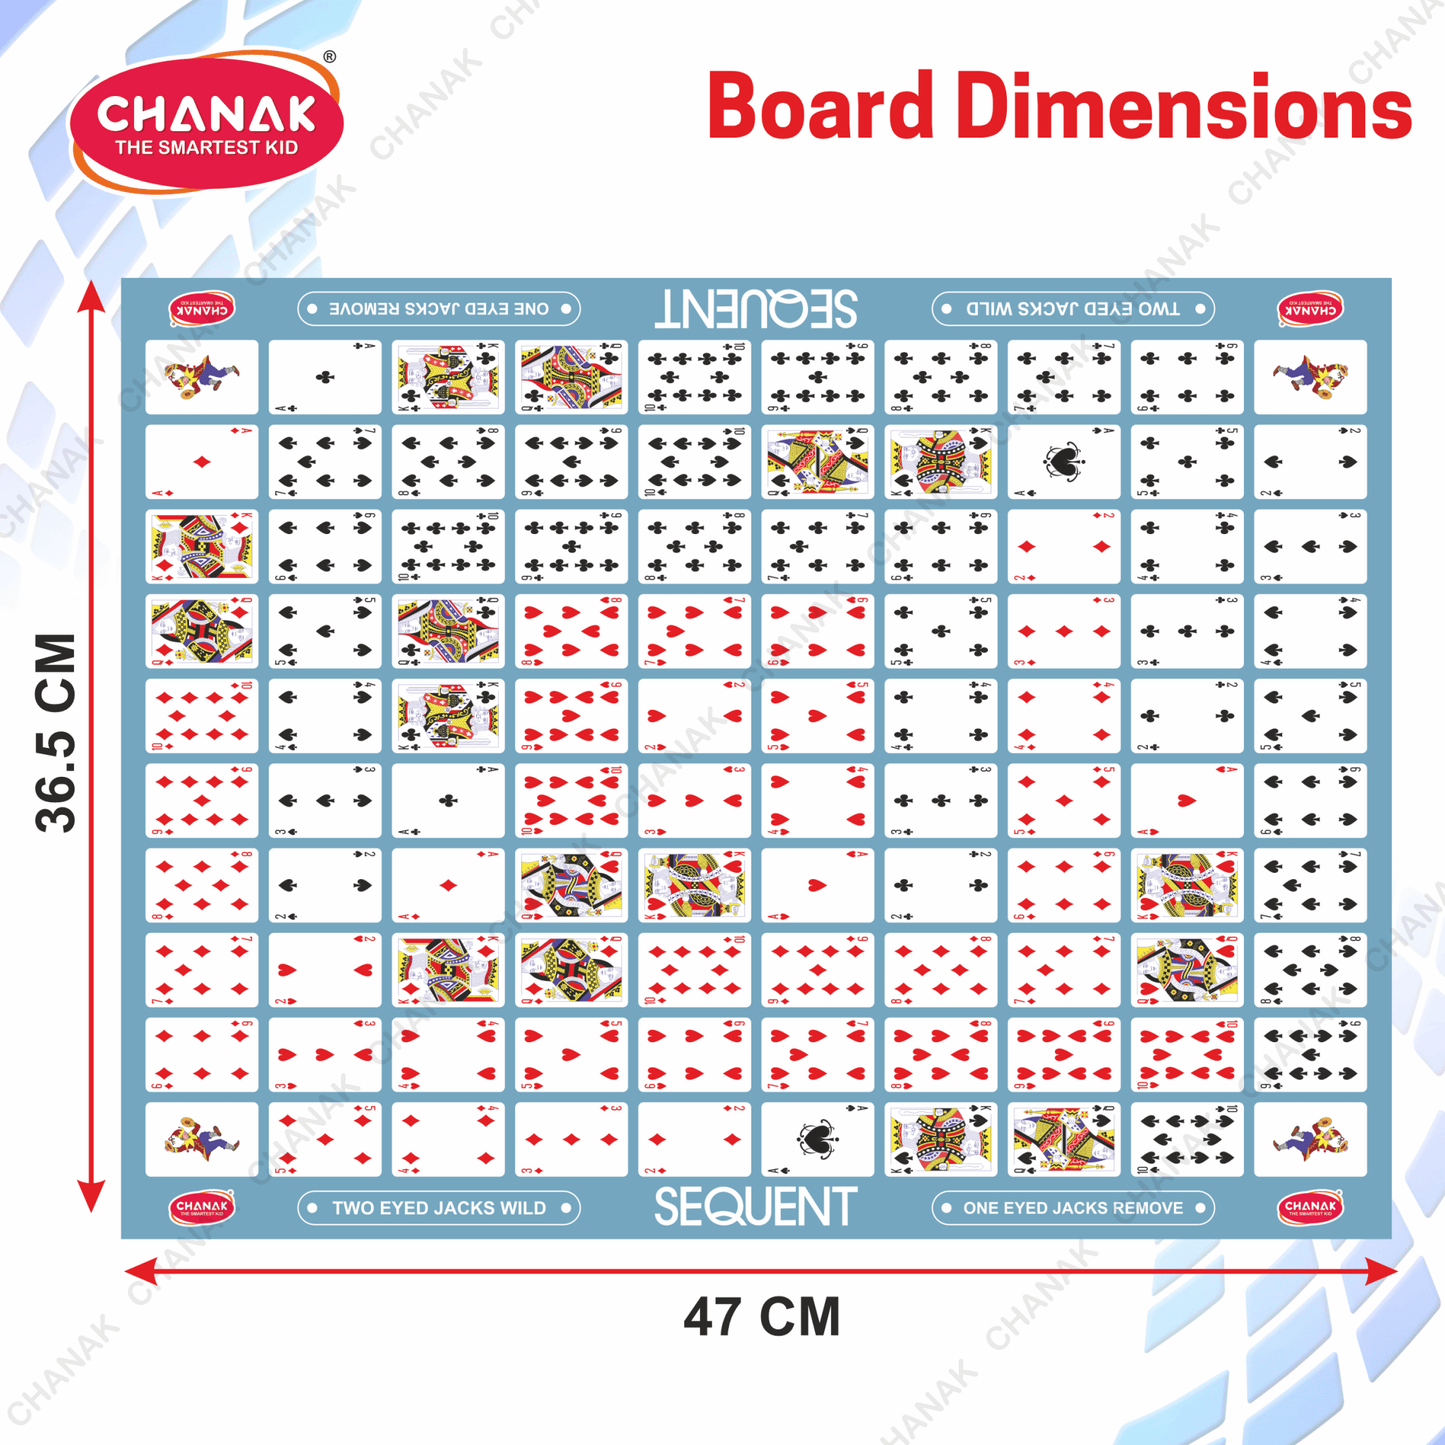 Chanak Sequence Board Game - chanak